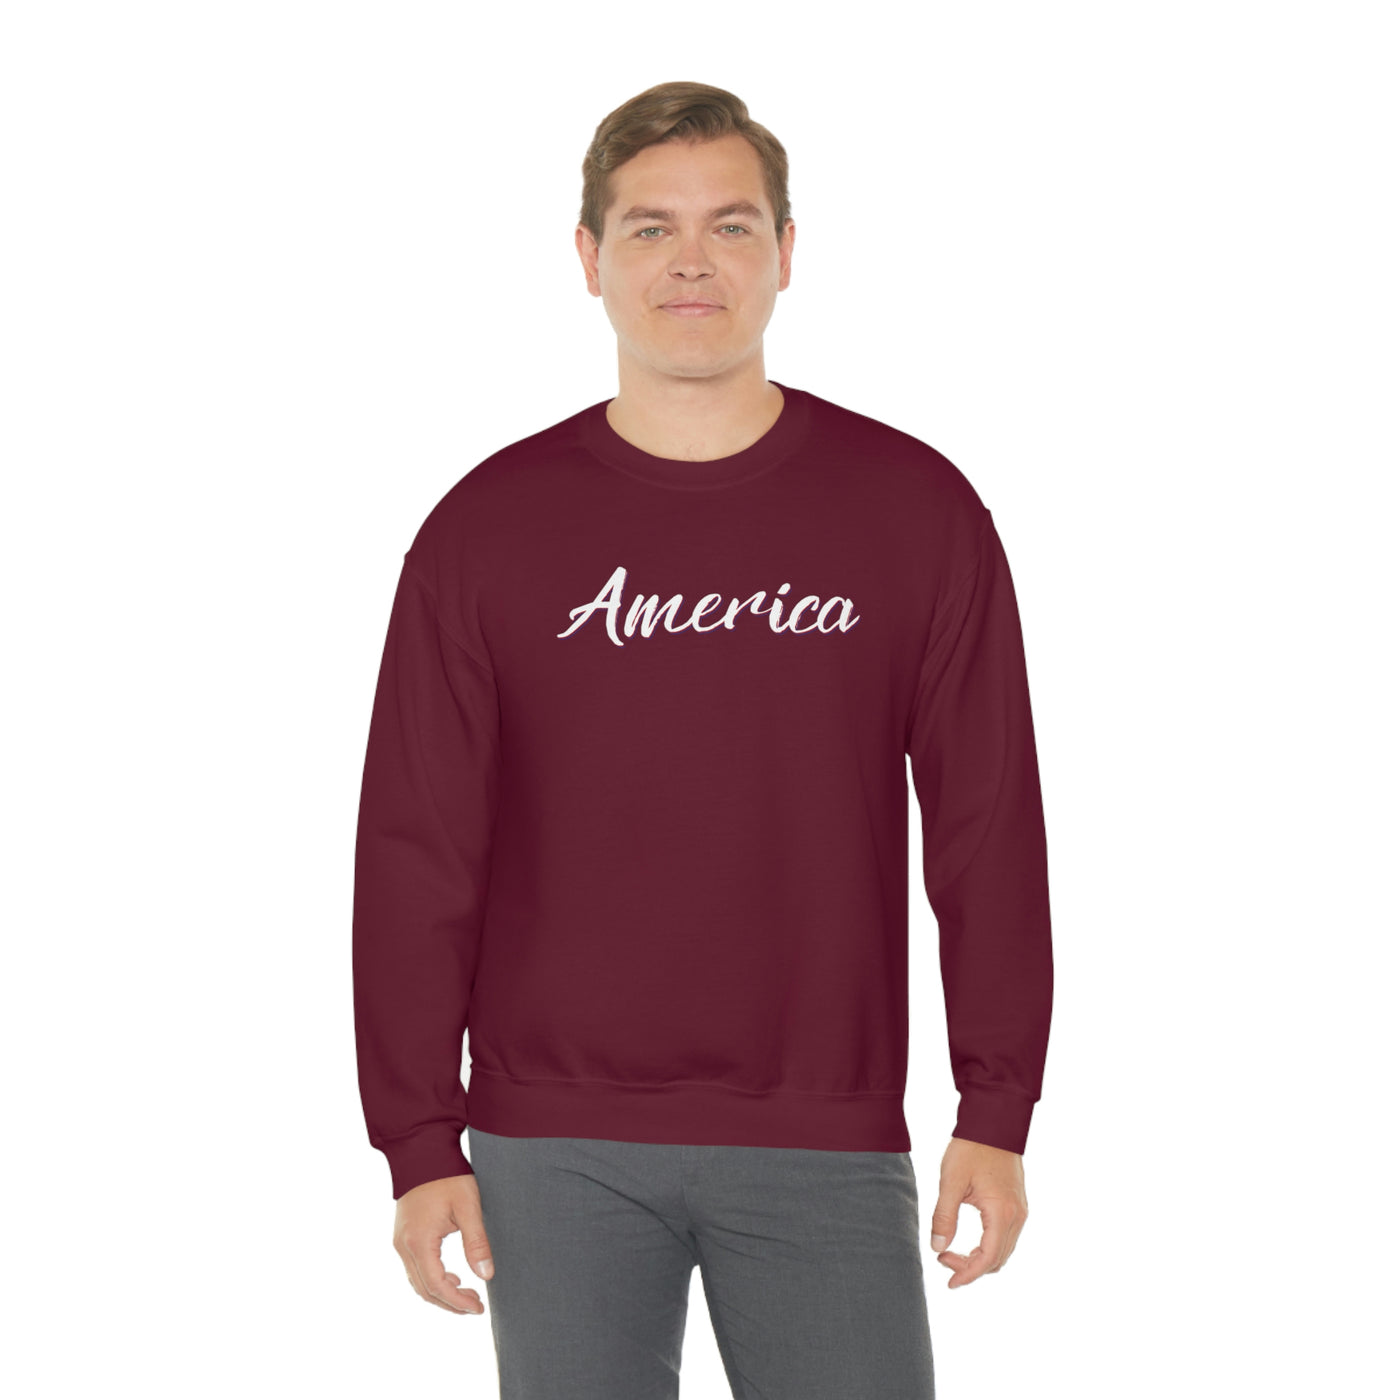 Script America Crewneck Sweatshirt